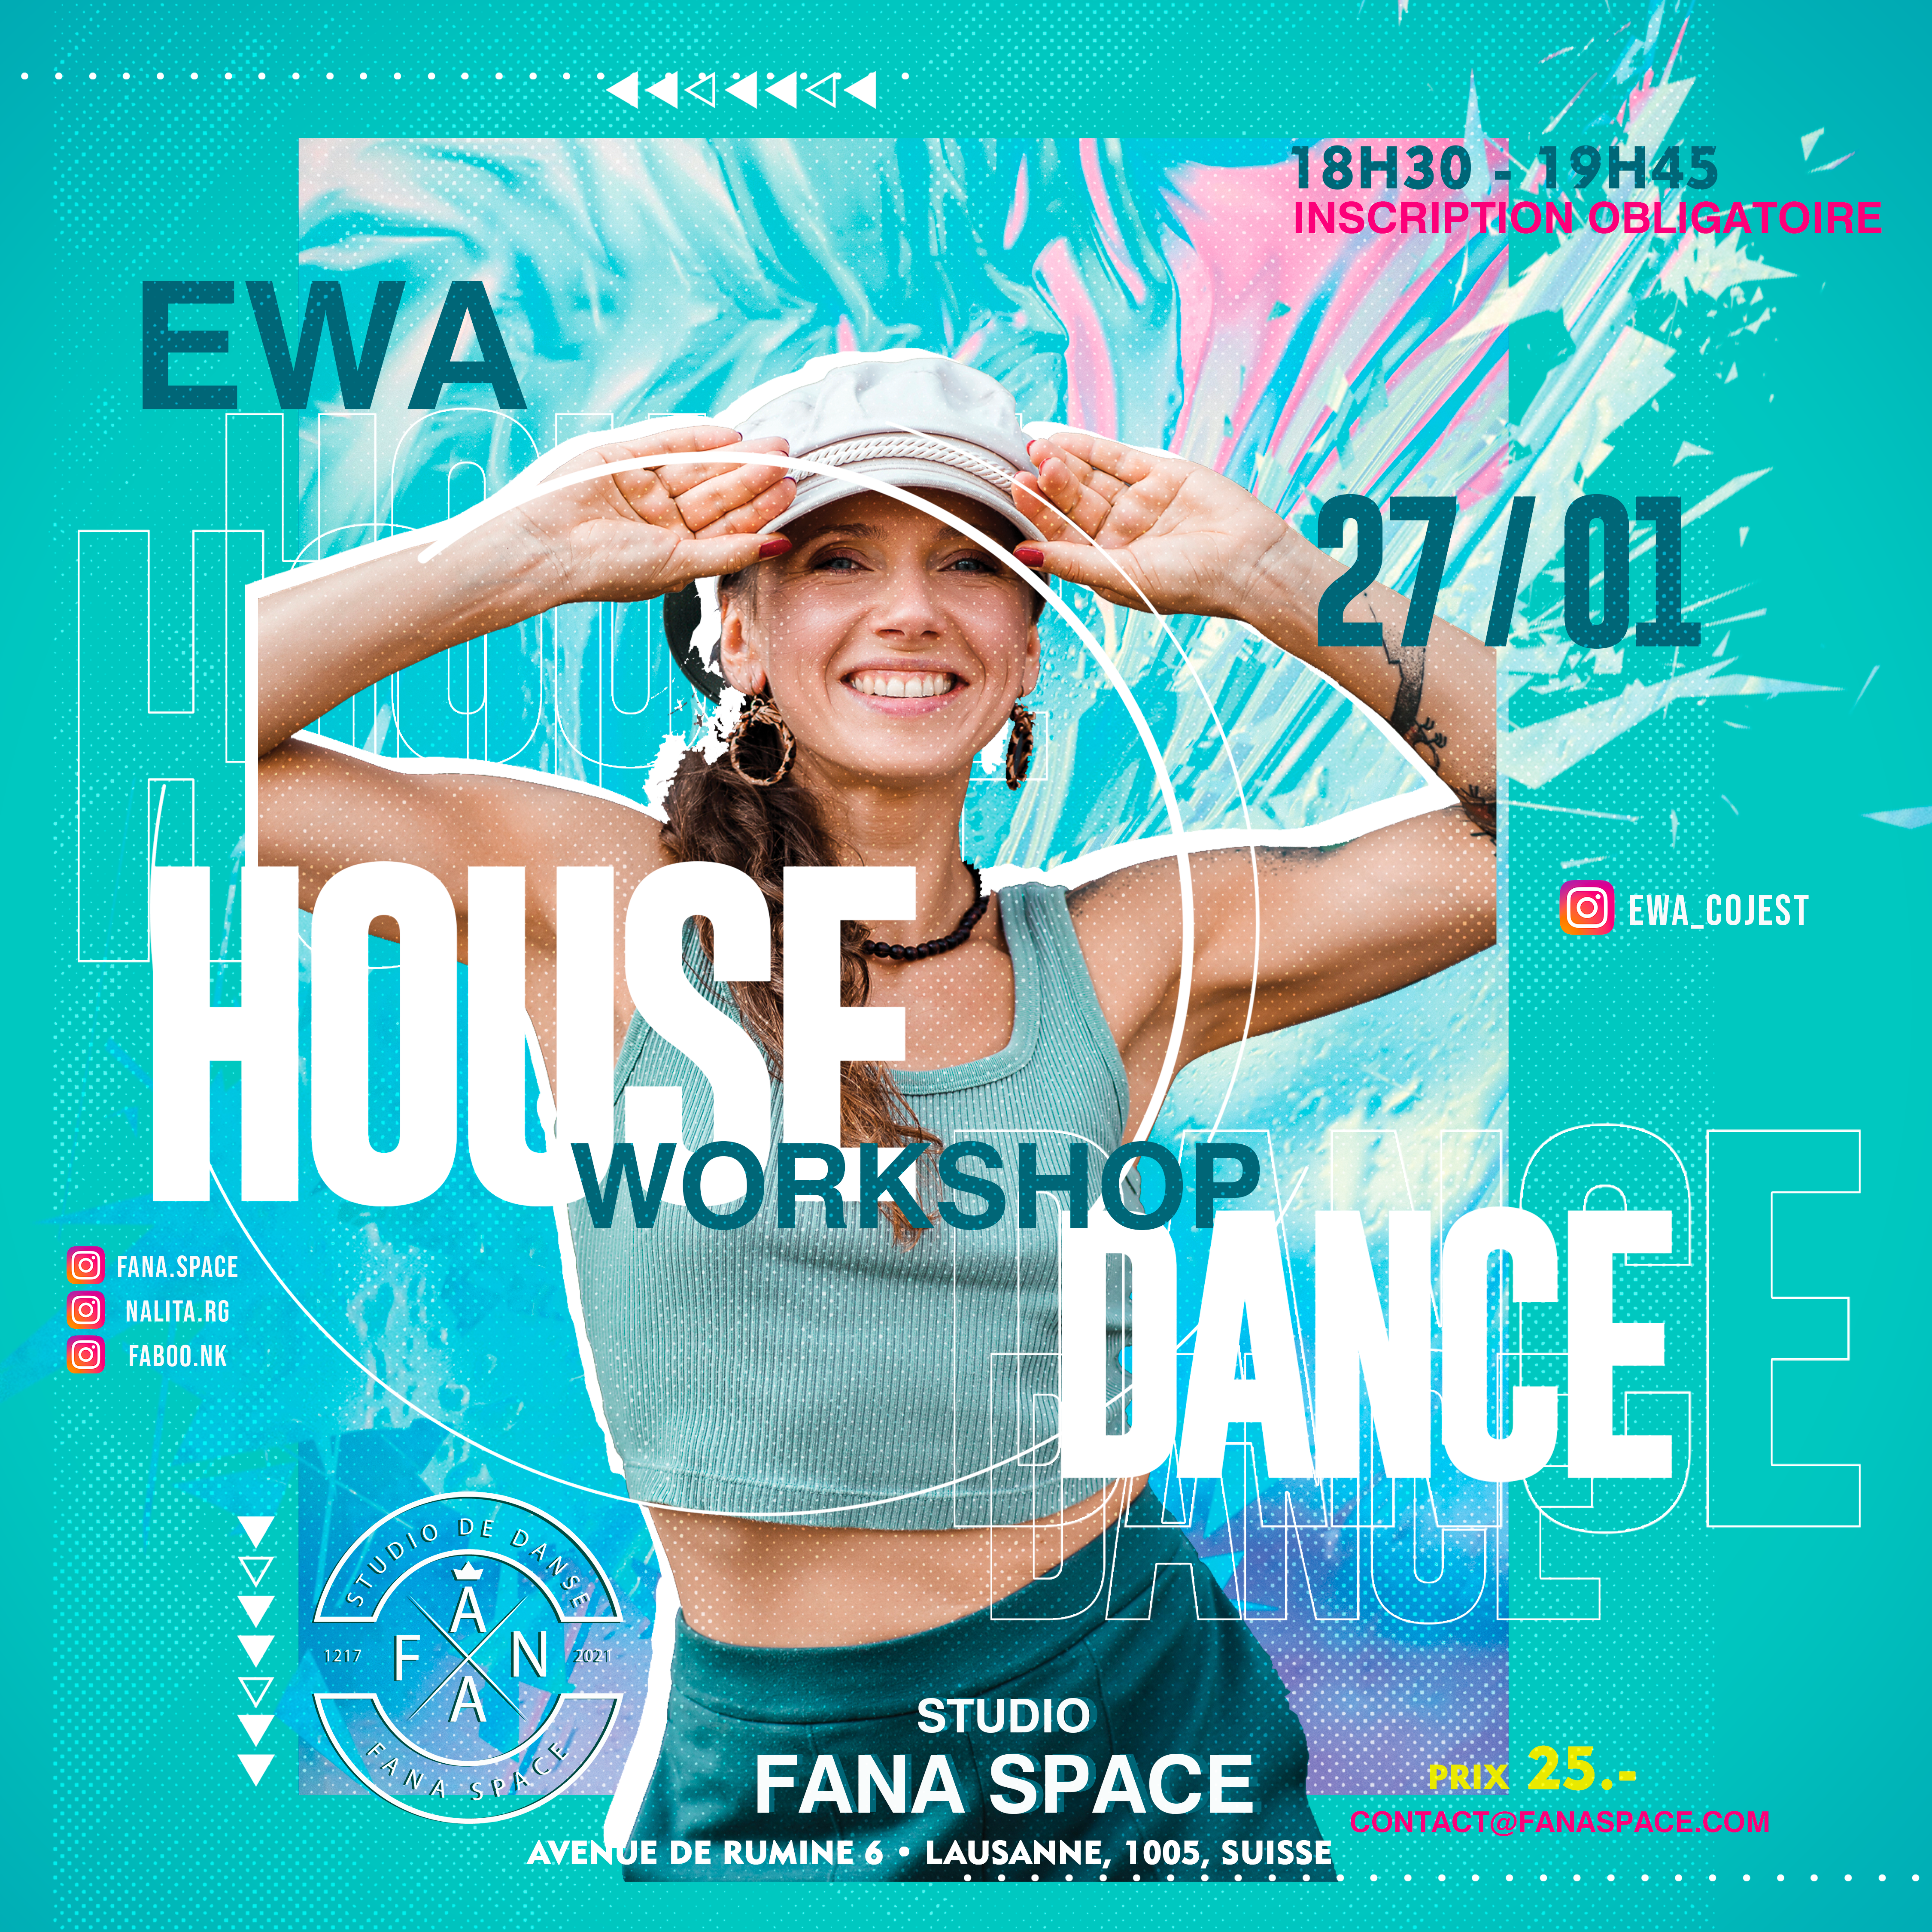 Stage House Dance au FaNa Space avec Ewa